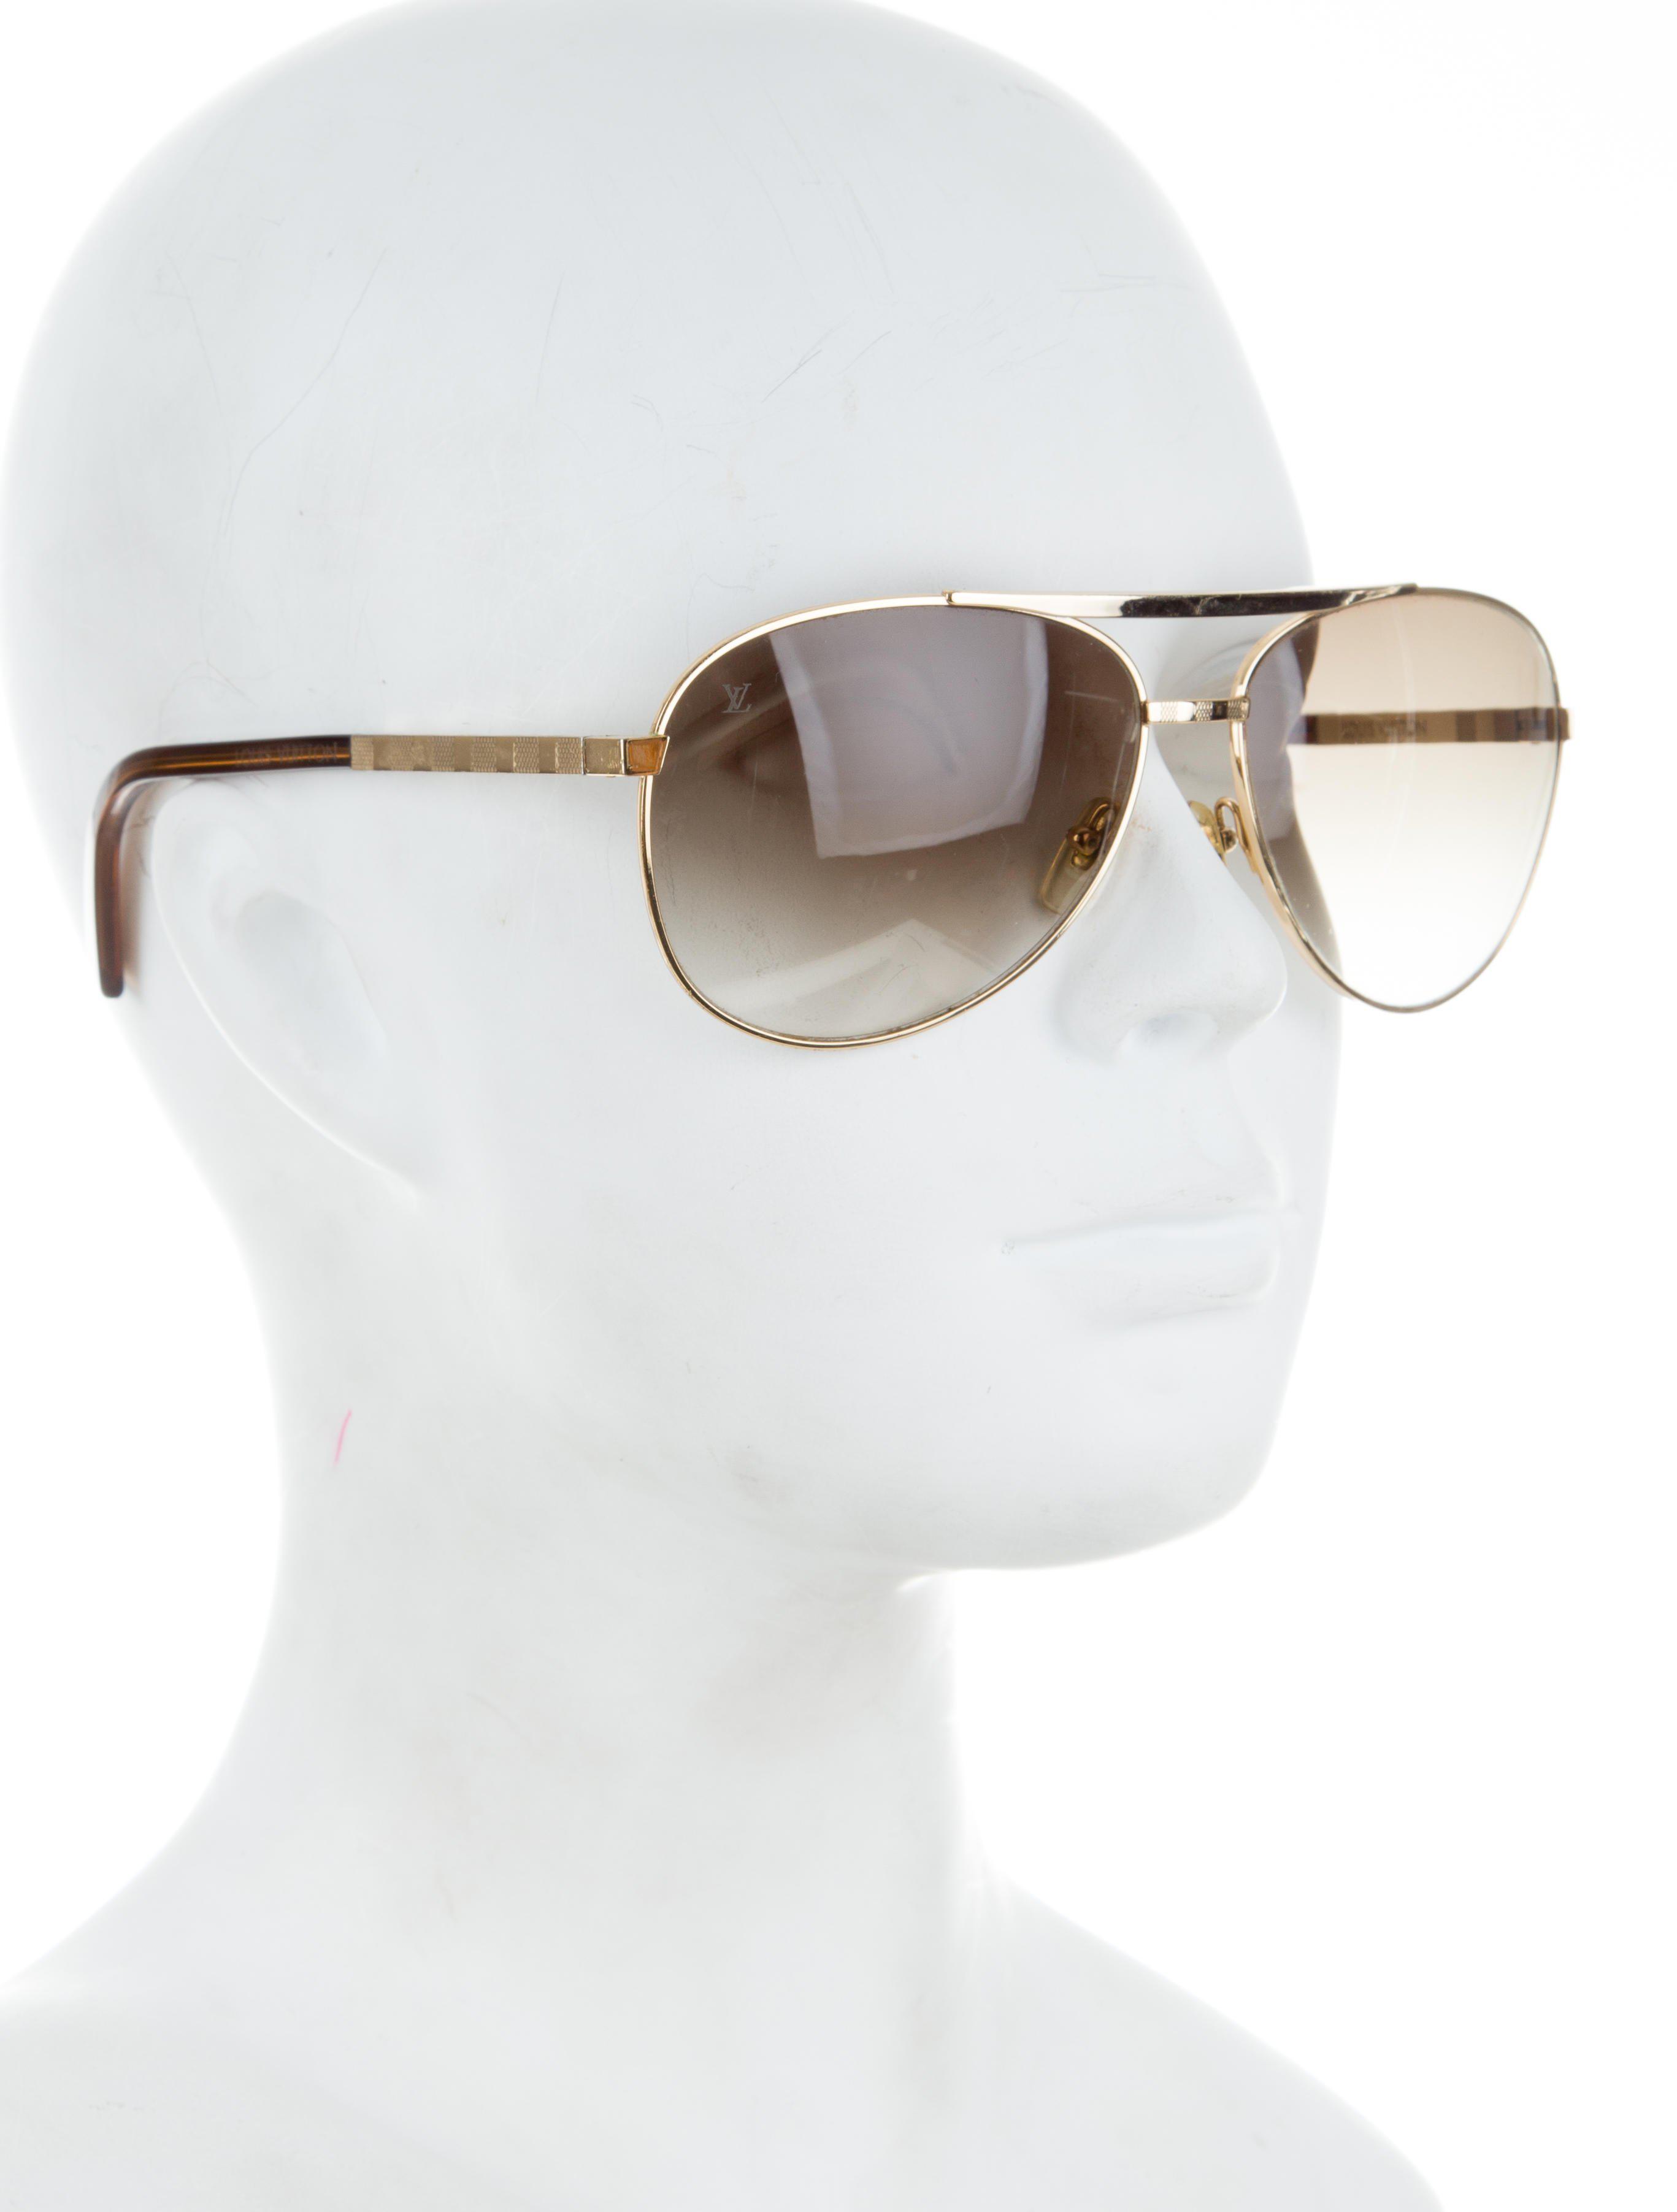 Lyst - Louis Vuitton Attitude Pilote Sunglasses Gold in Metallic